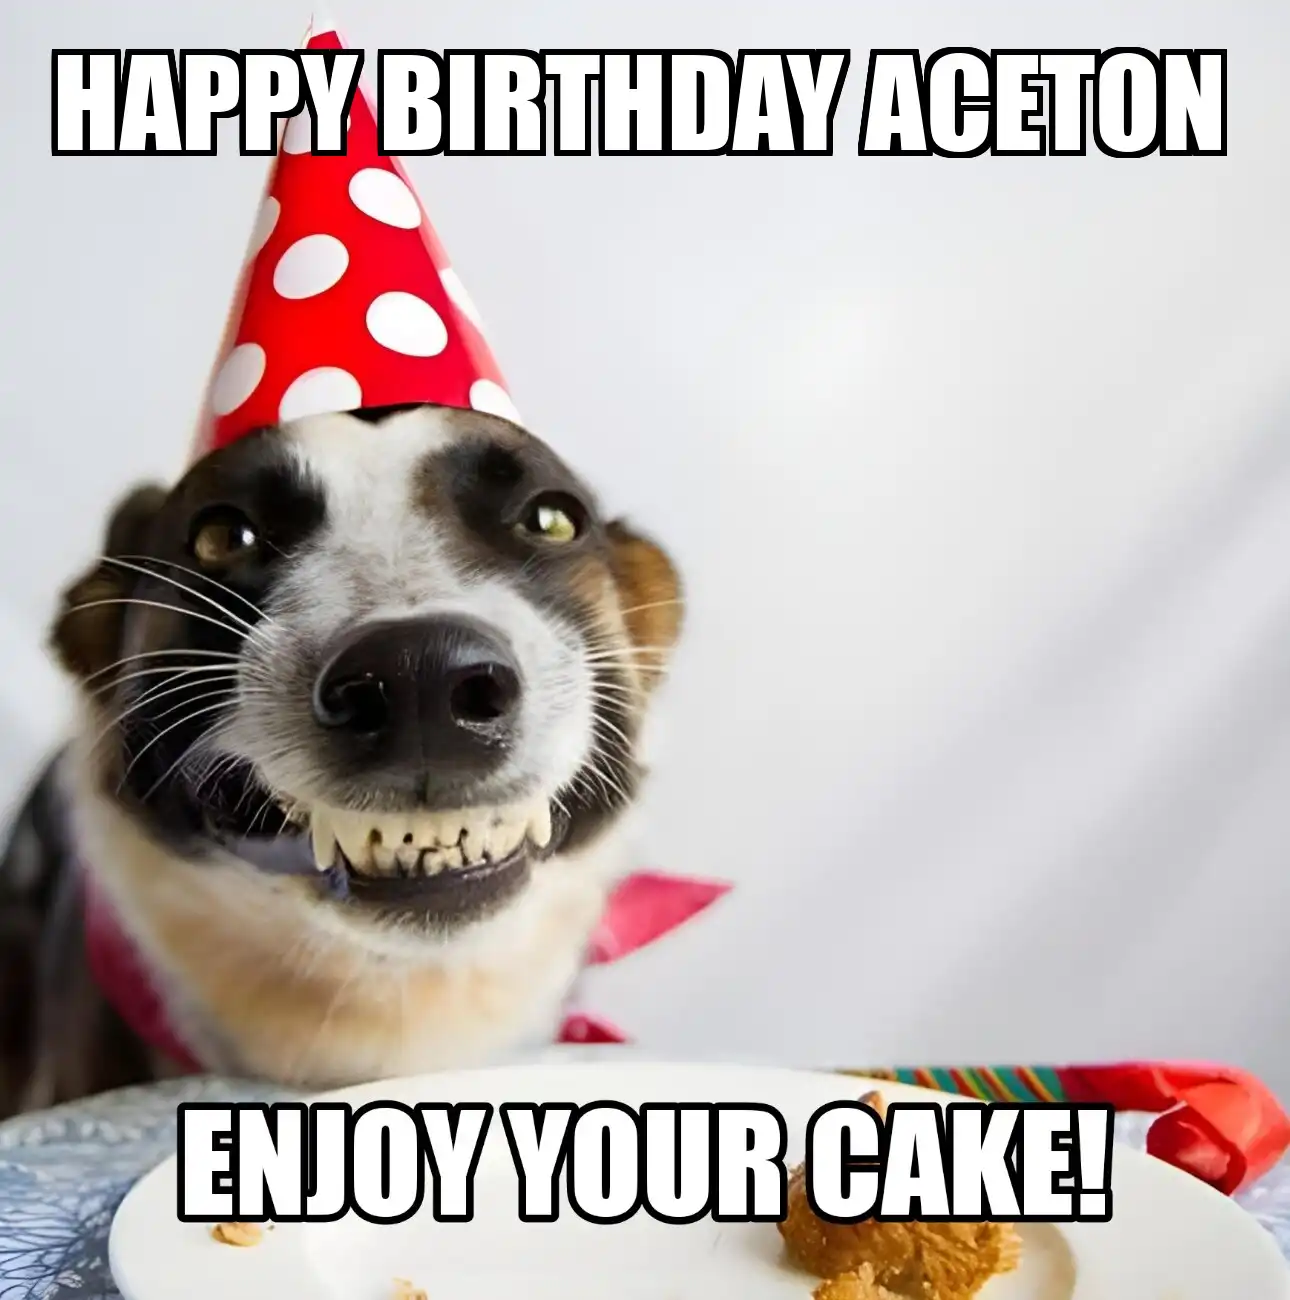 Happy Birthday Aceton Enjoy Your Cake Dog Meme